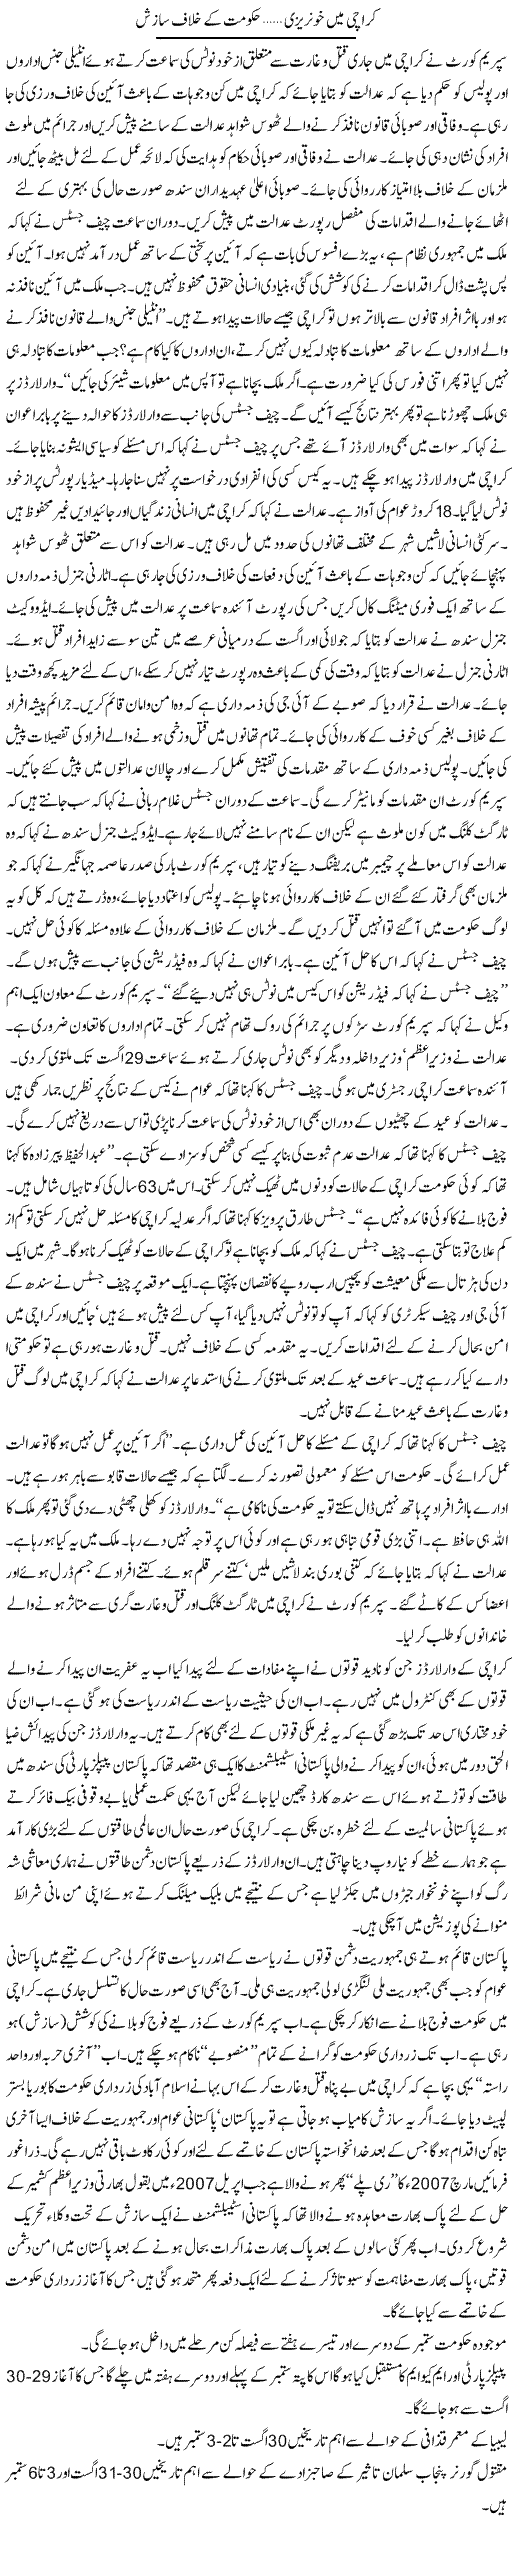 Karachi Killings Express Column Zamurad Naqvi  29 August 2011